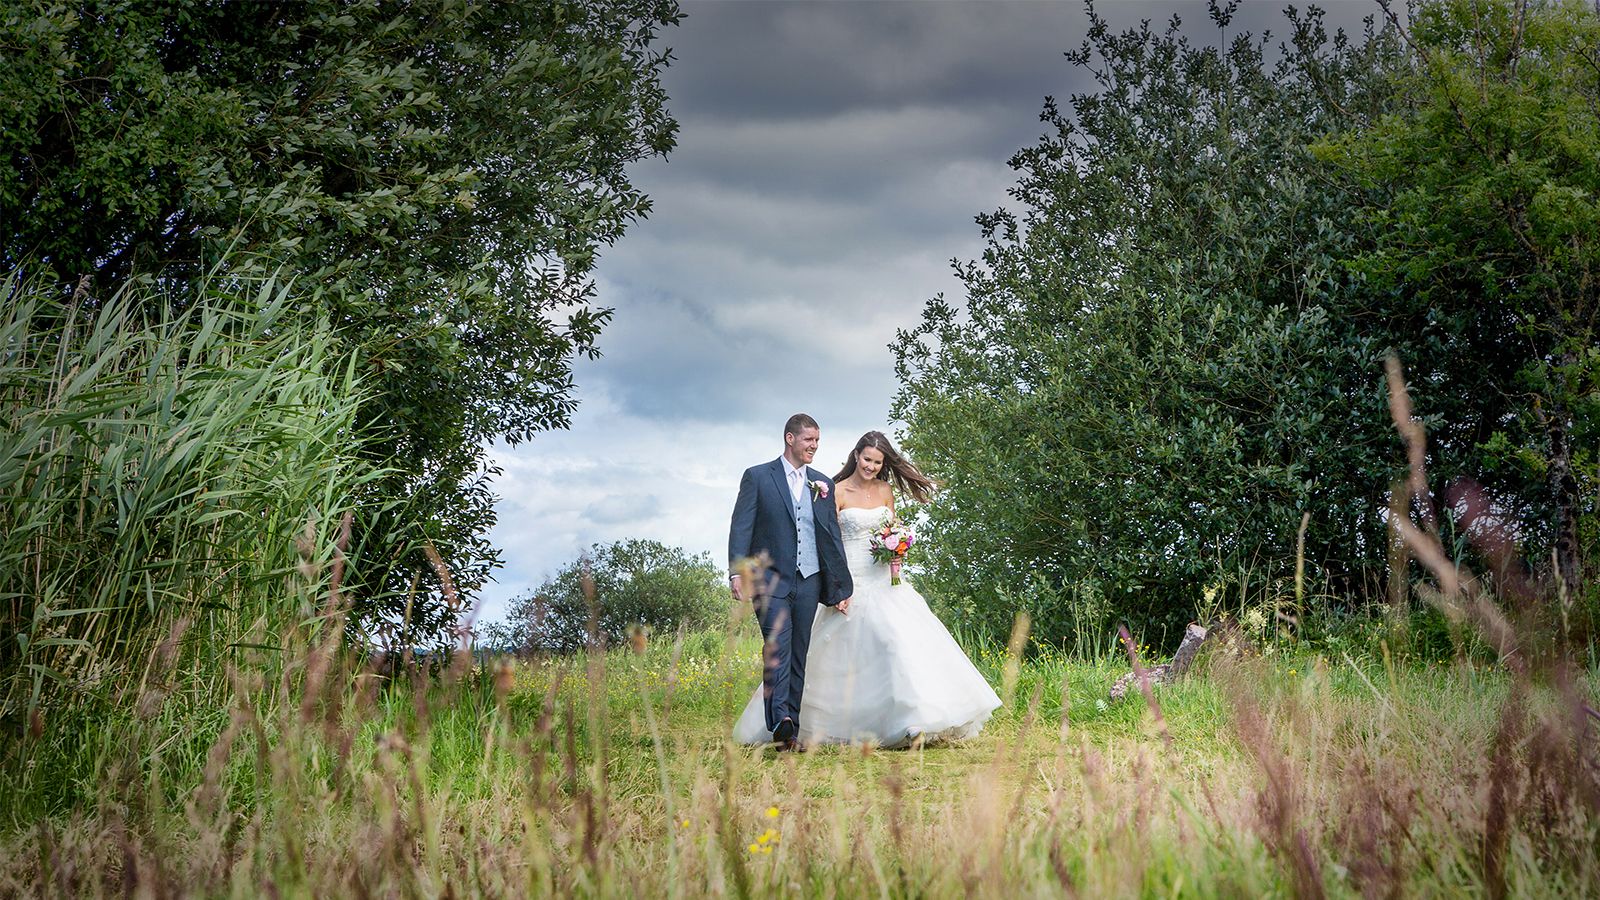 A wedding photographer captures a bride and groom walking through tall grass.